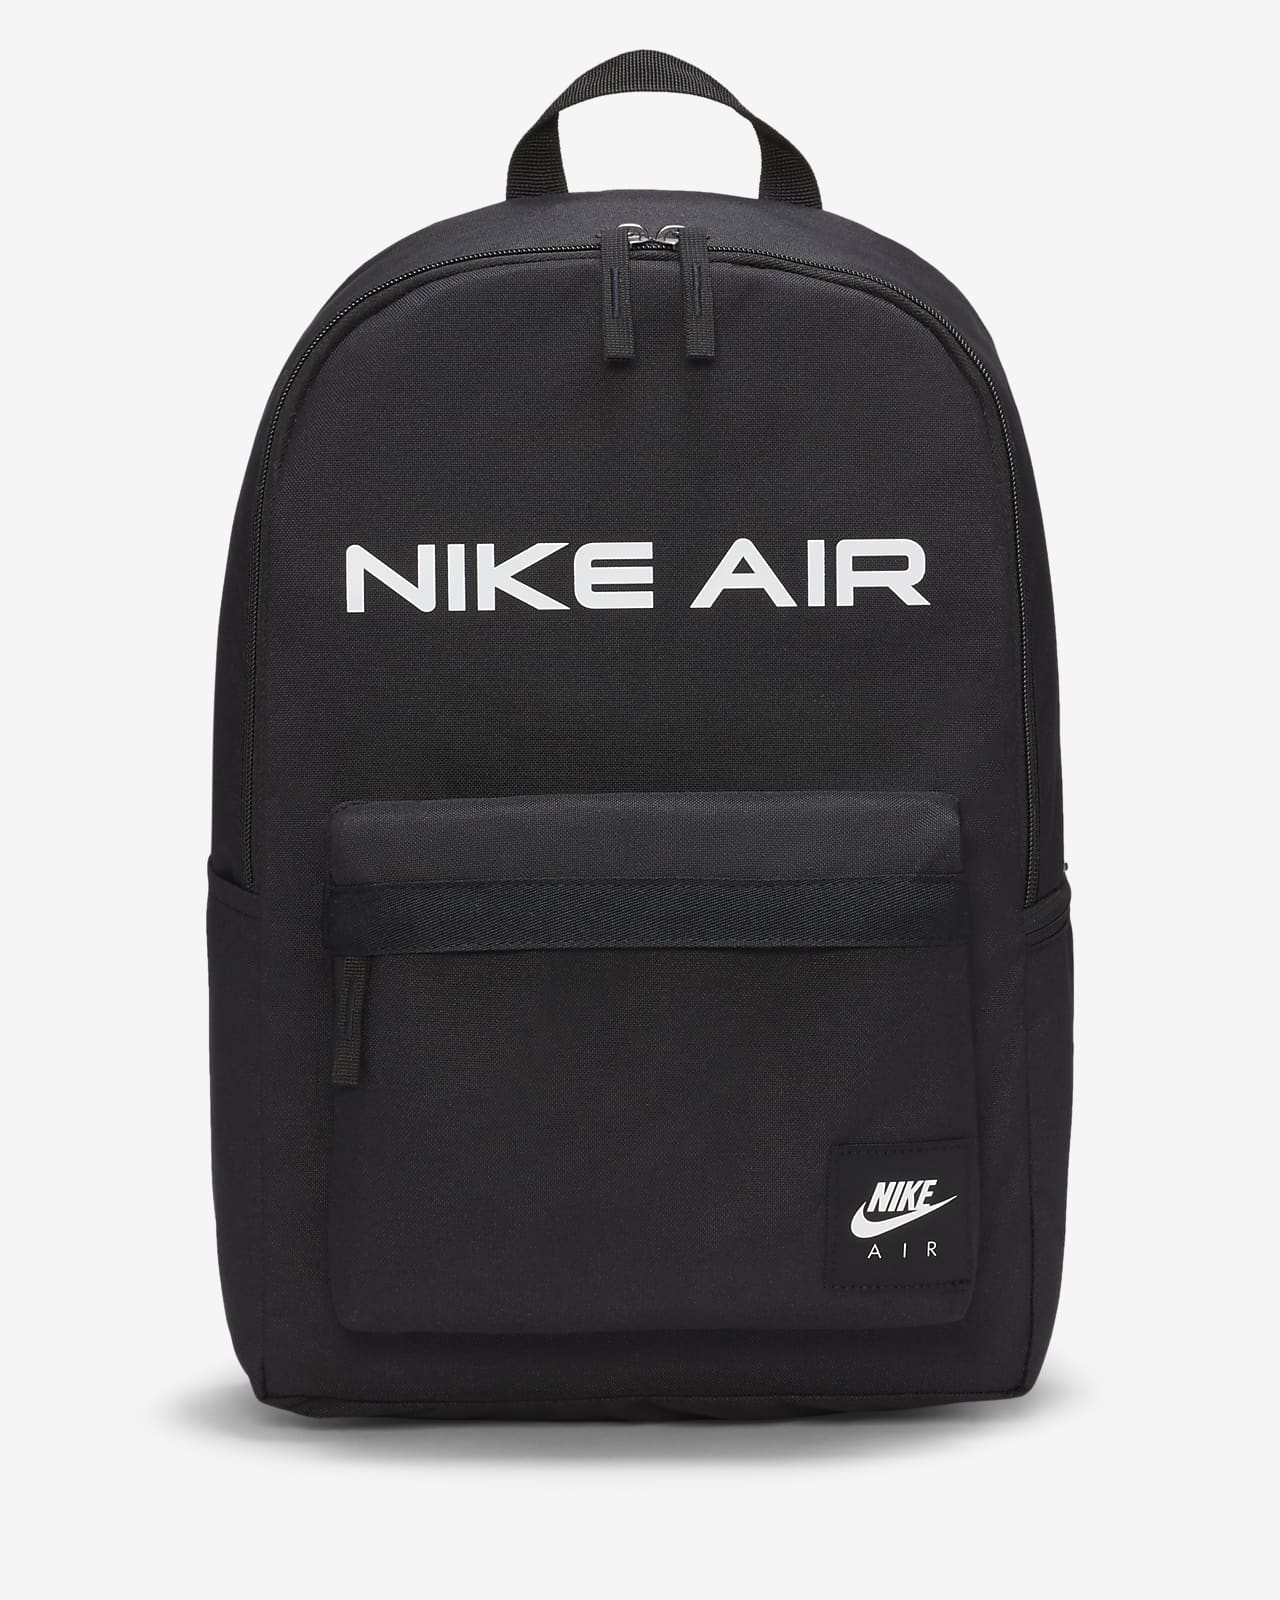 nike air bag black